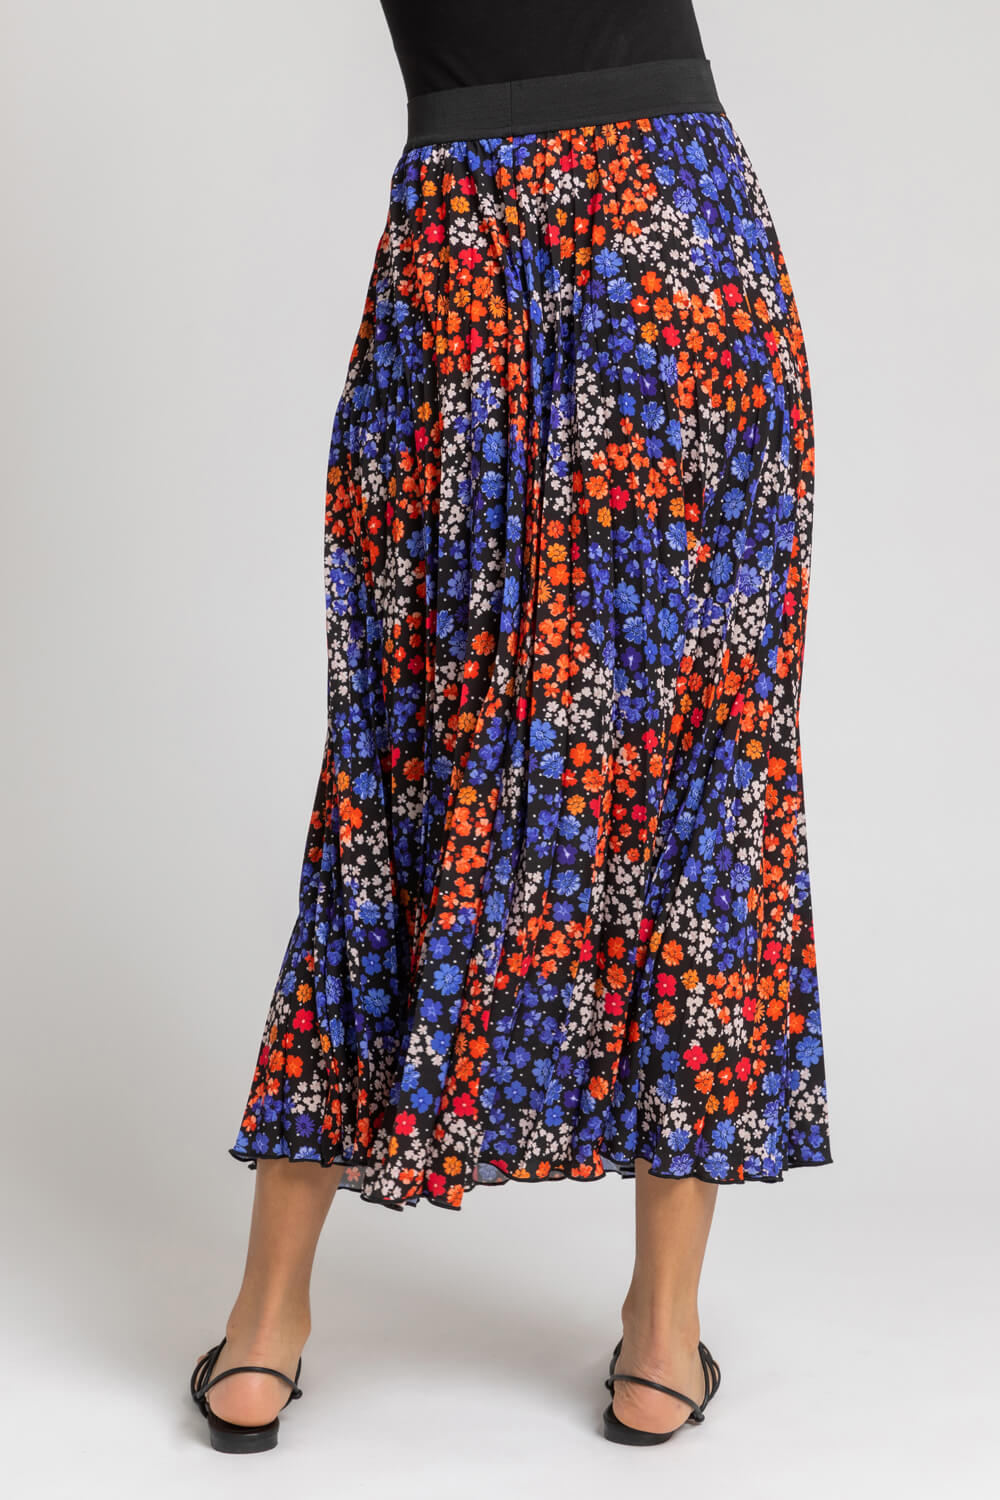 ORANGE Floral Spot Print Pleated Maxi Skirt, Image 2 of 4